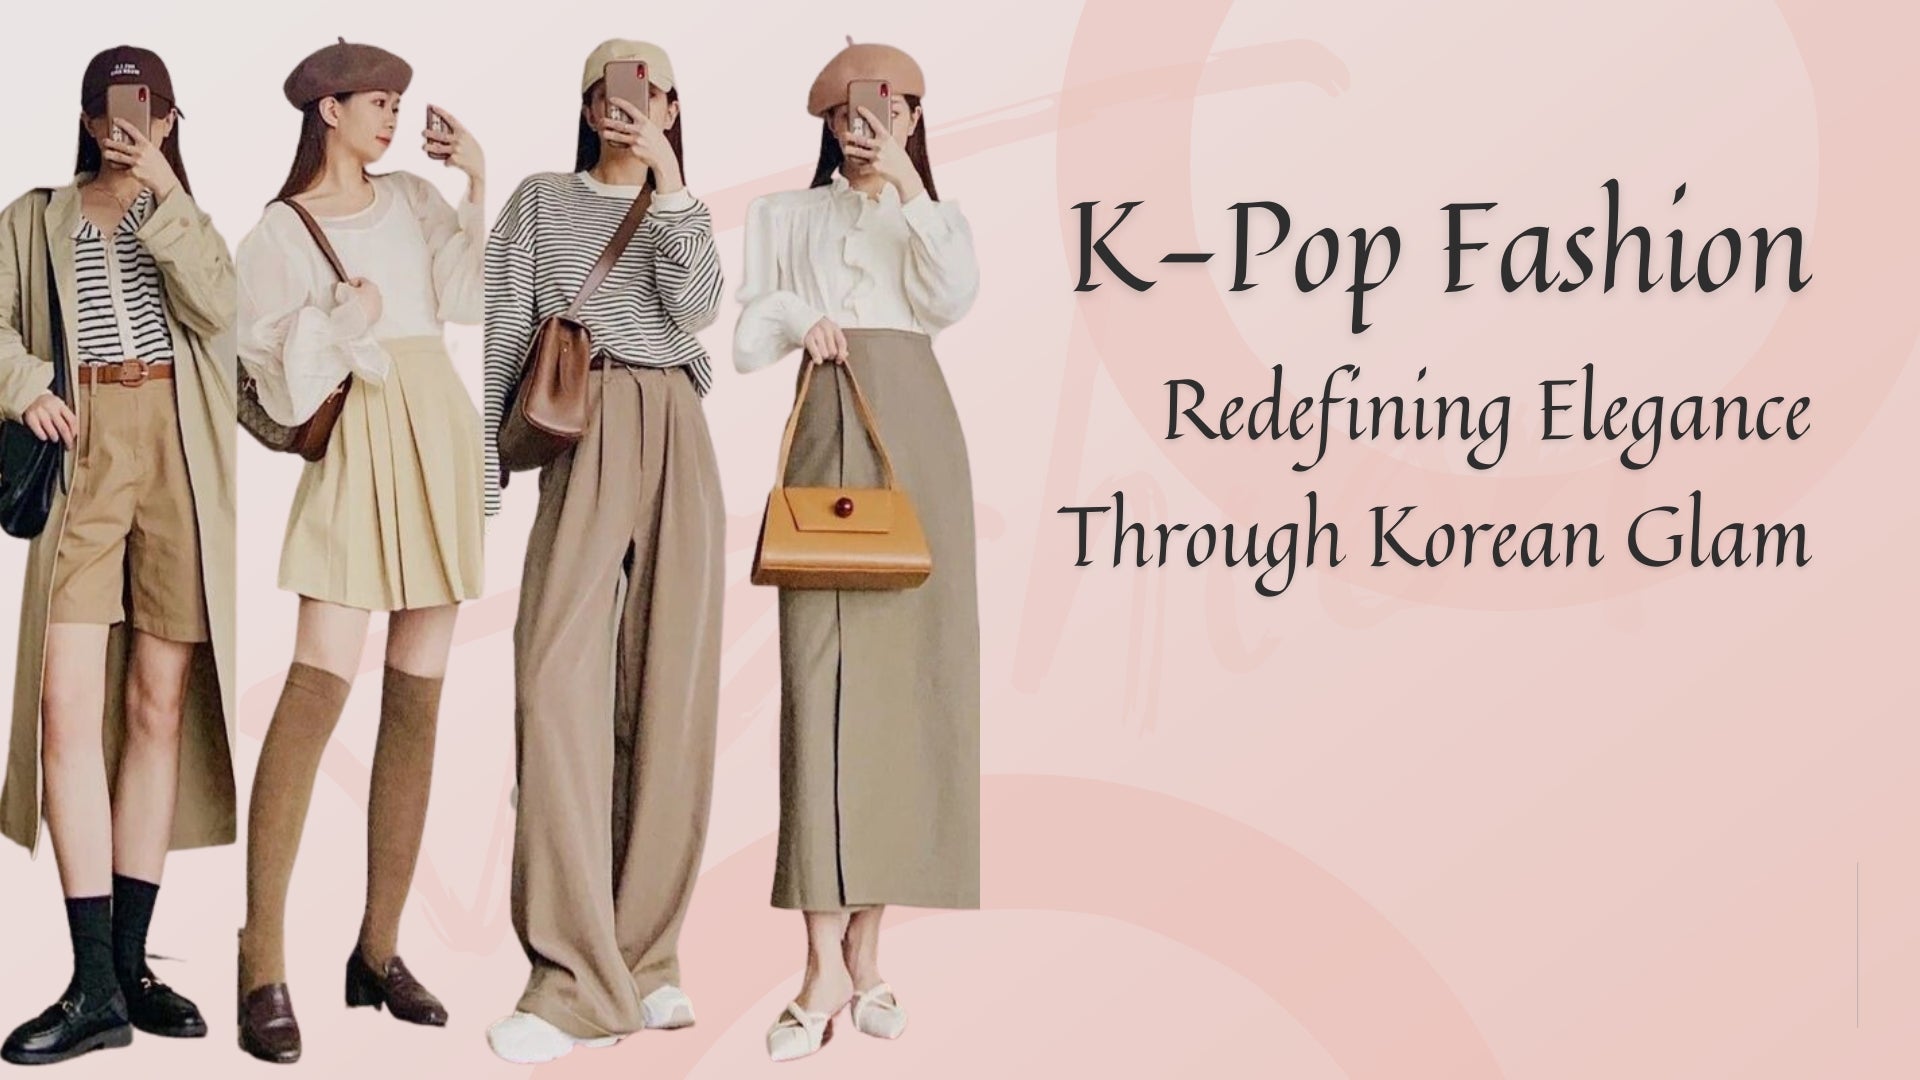 Embrace K-Pop Fashion: Explore the Elegance of Korean Glam 